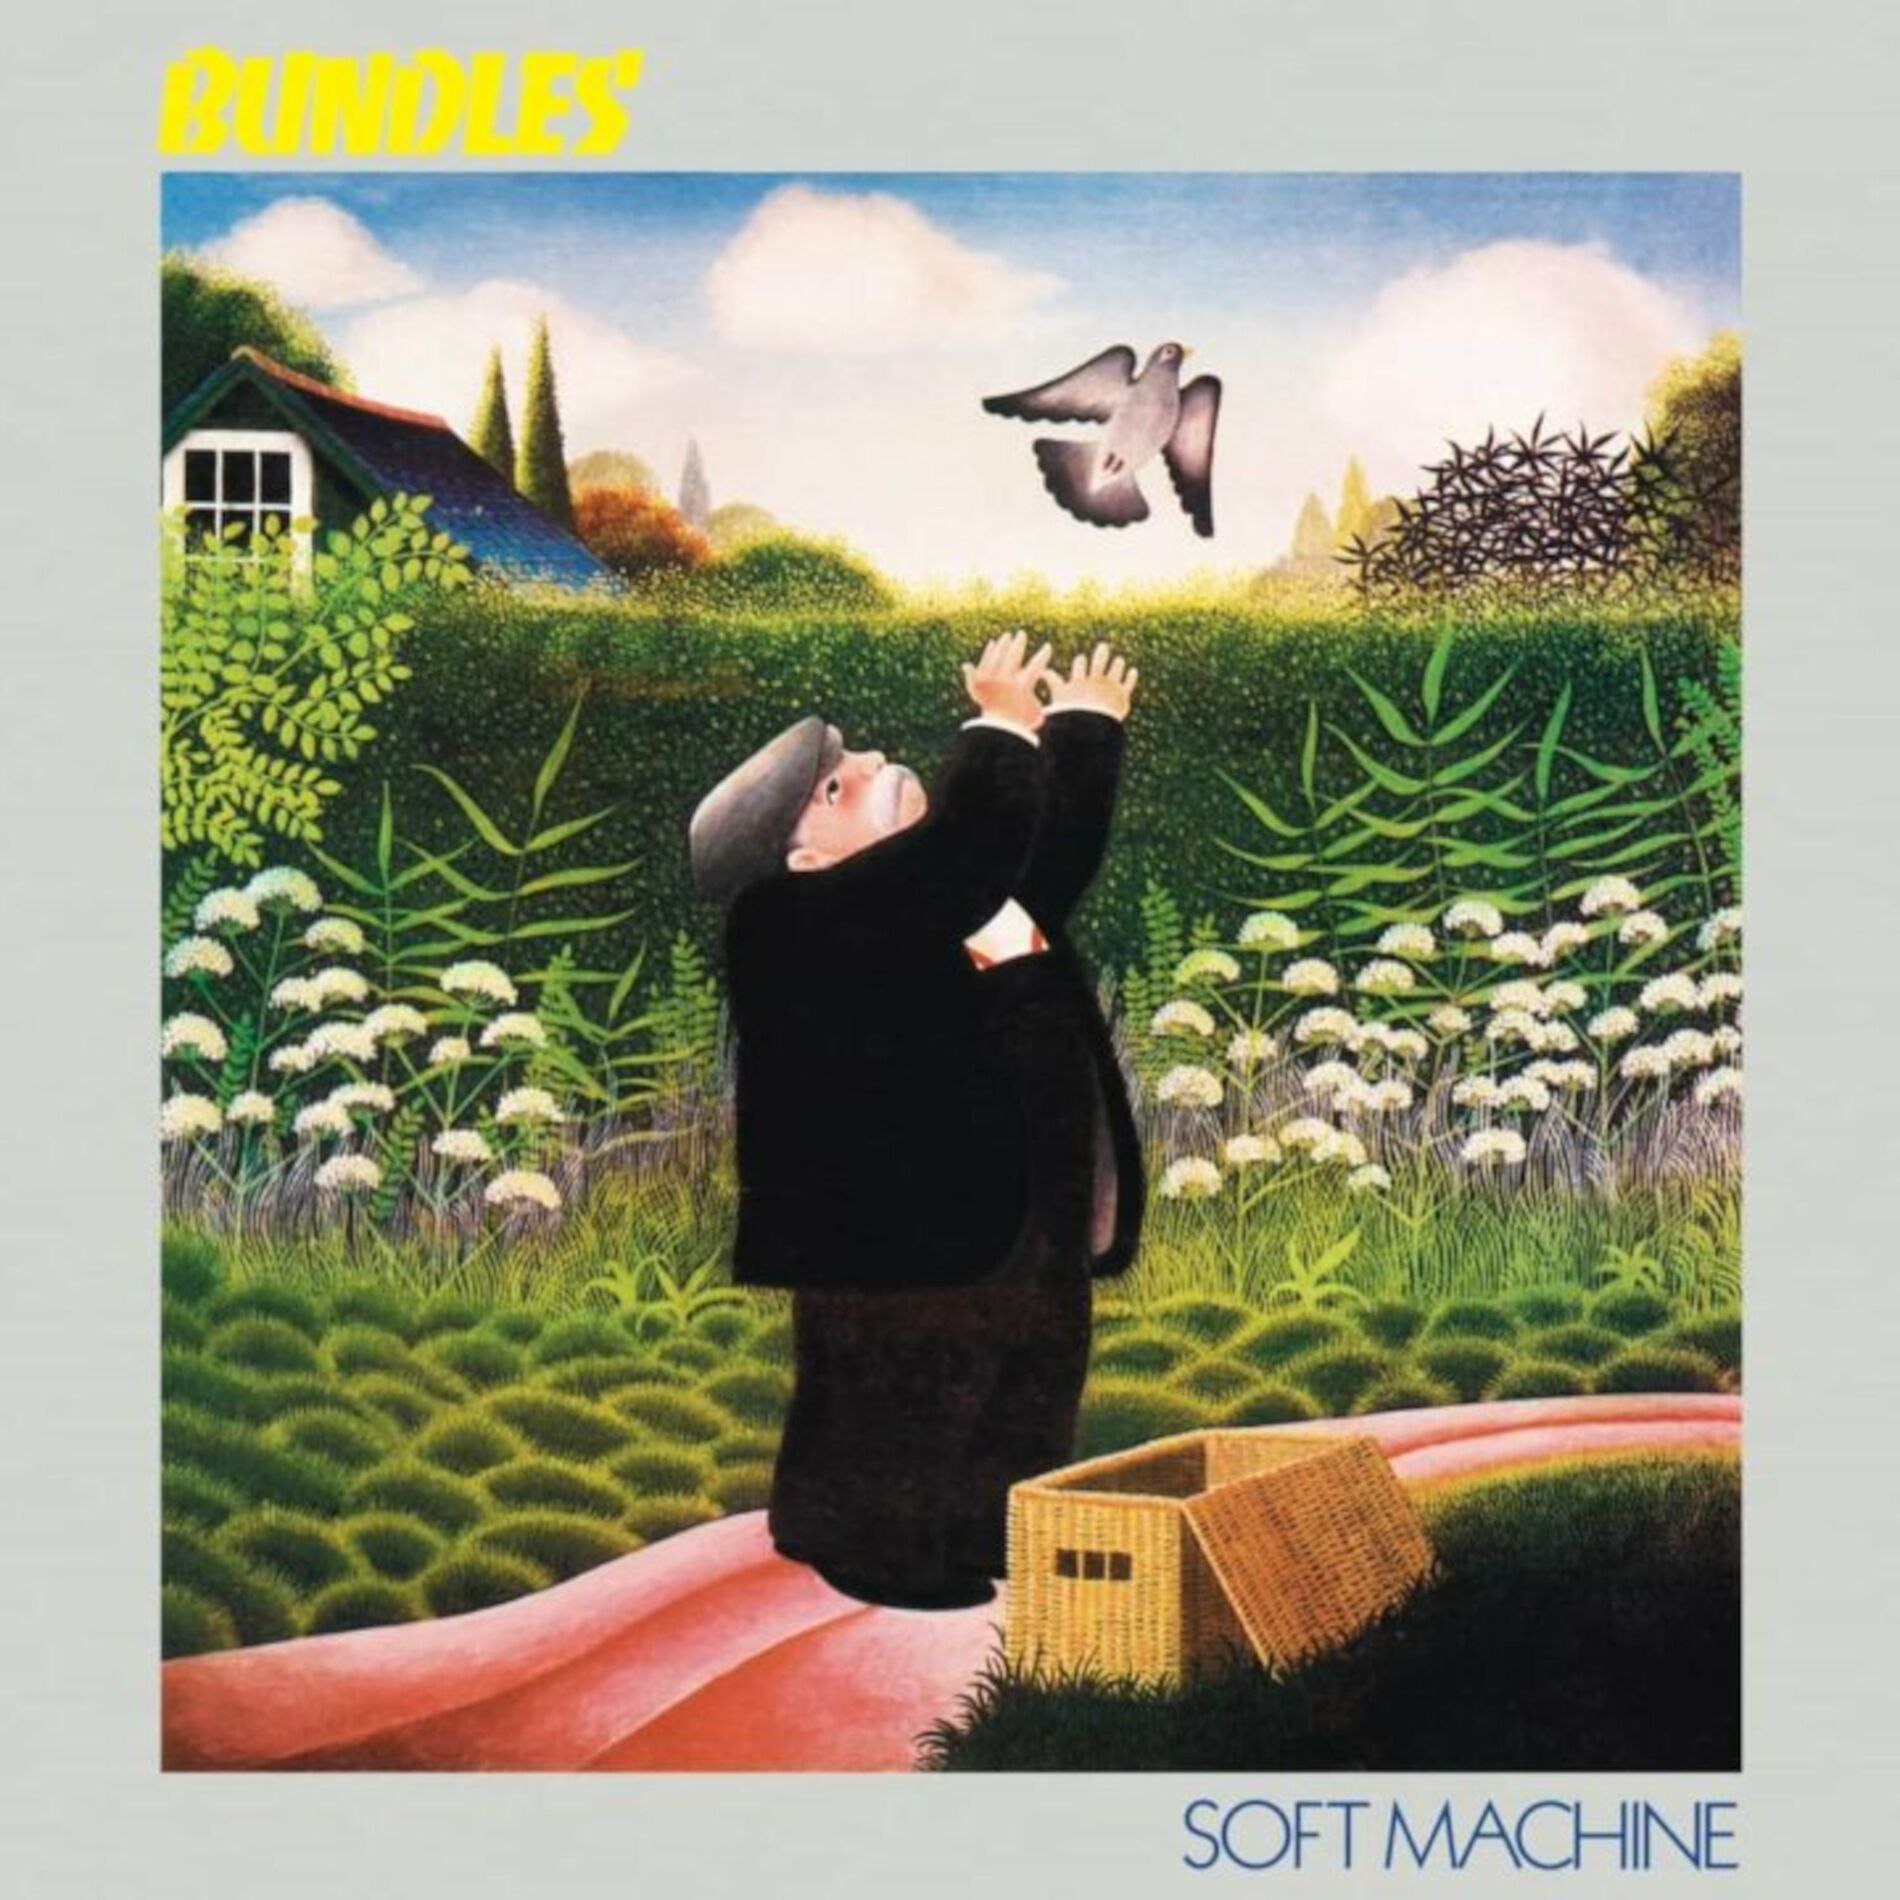 Soft Machine: albums